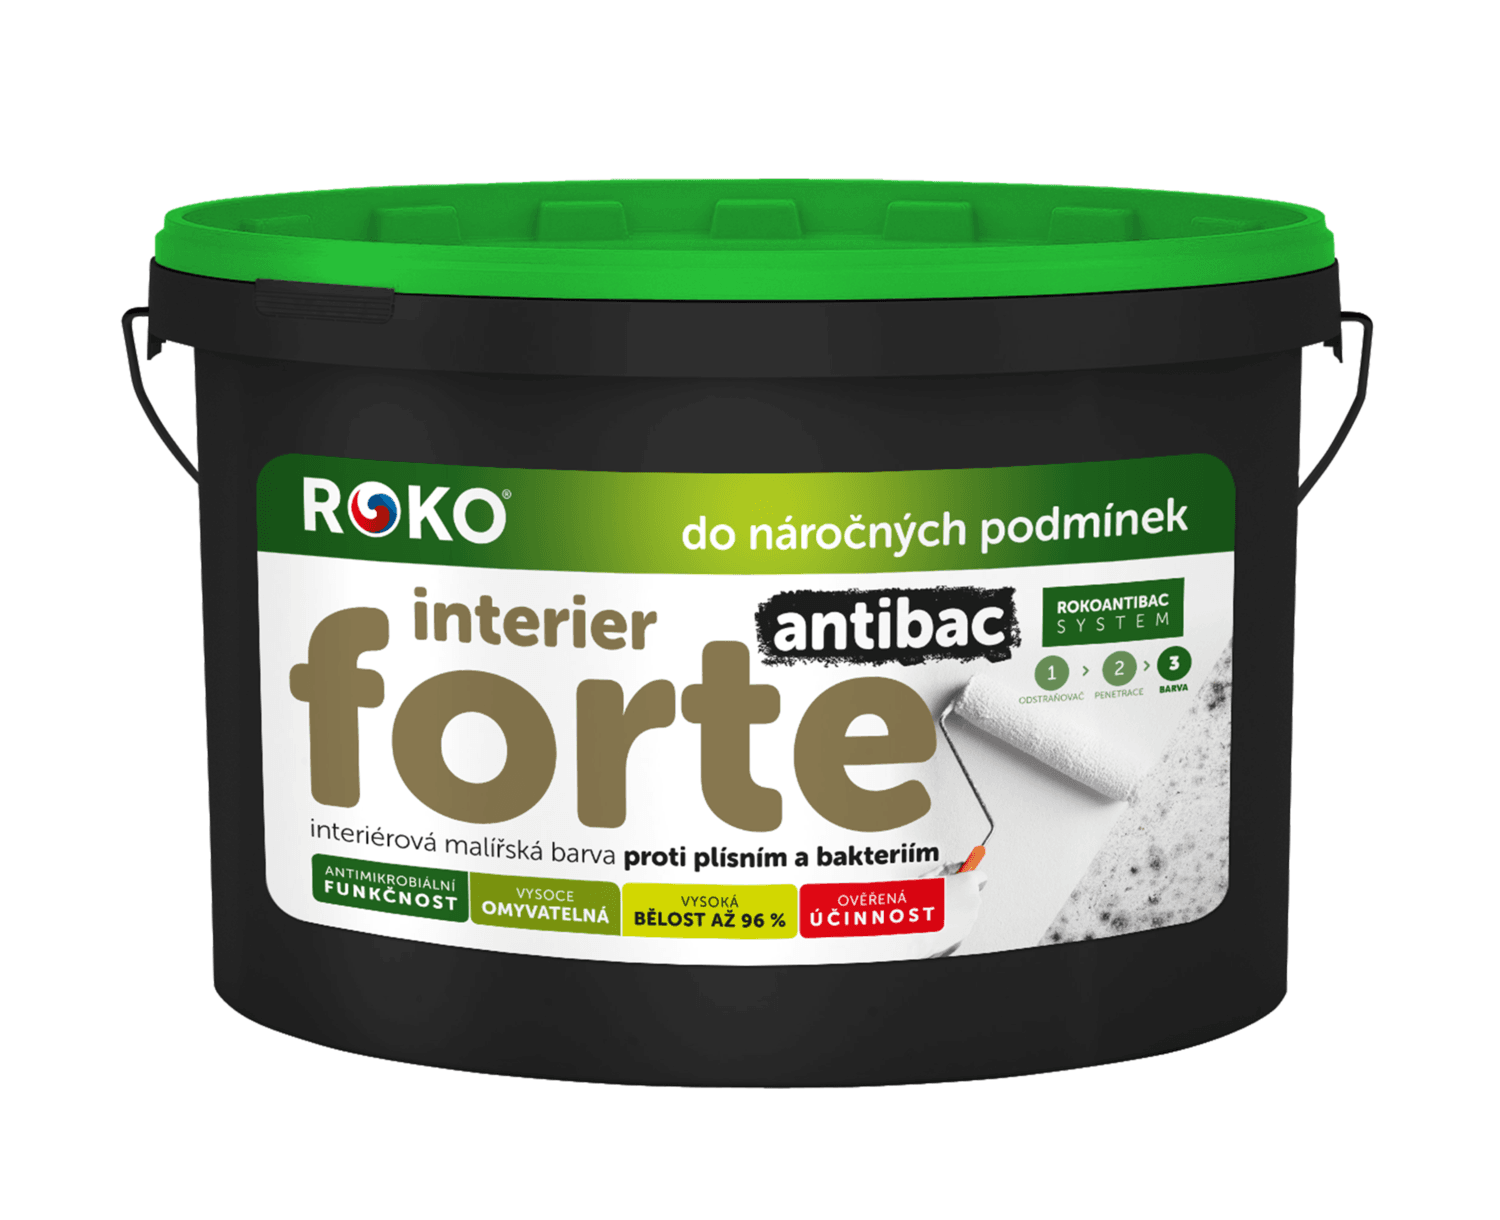 Roko Interier Forte Antibac 7,5 kg